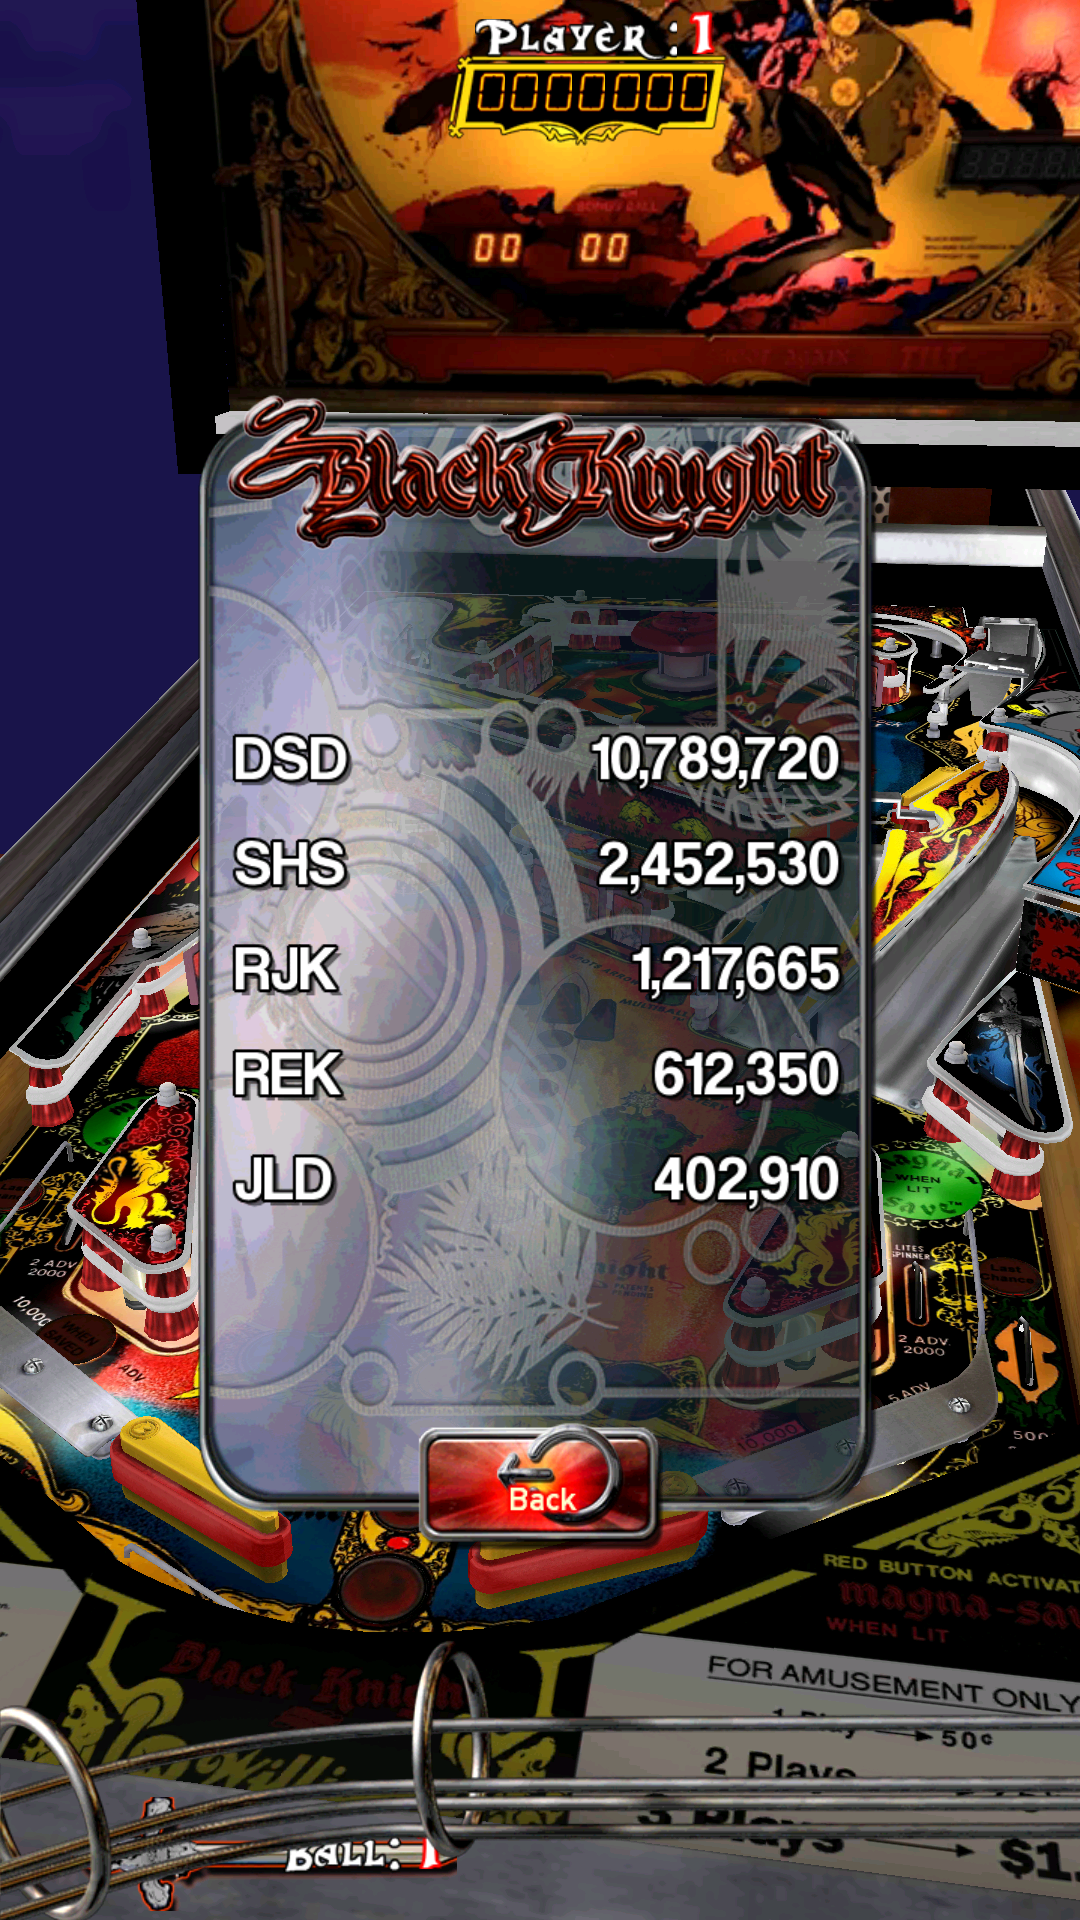 Pinball Arcade: Black Knight 10,789,720 points